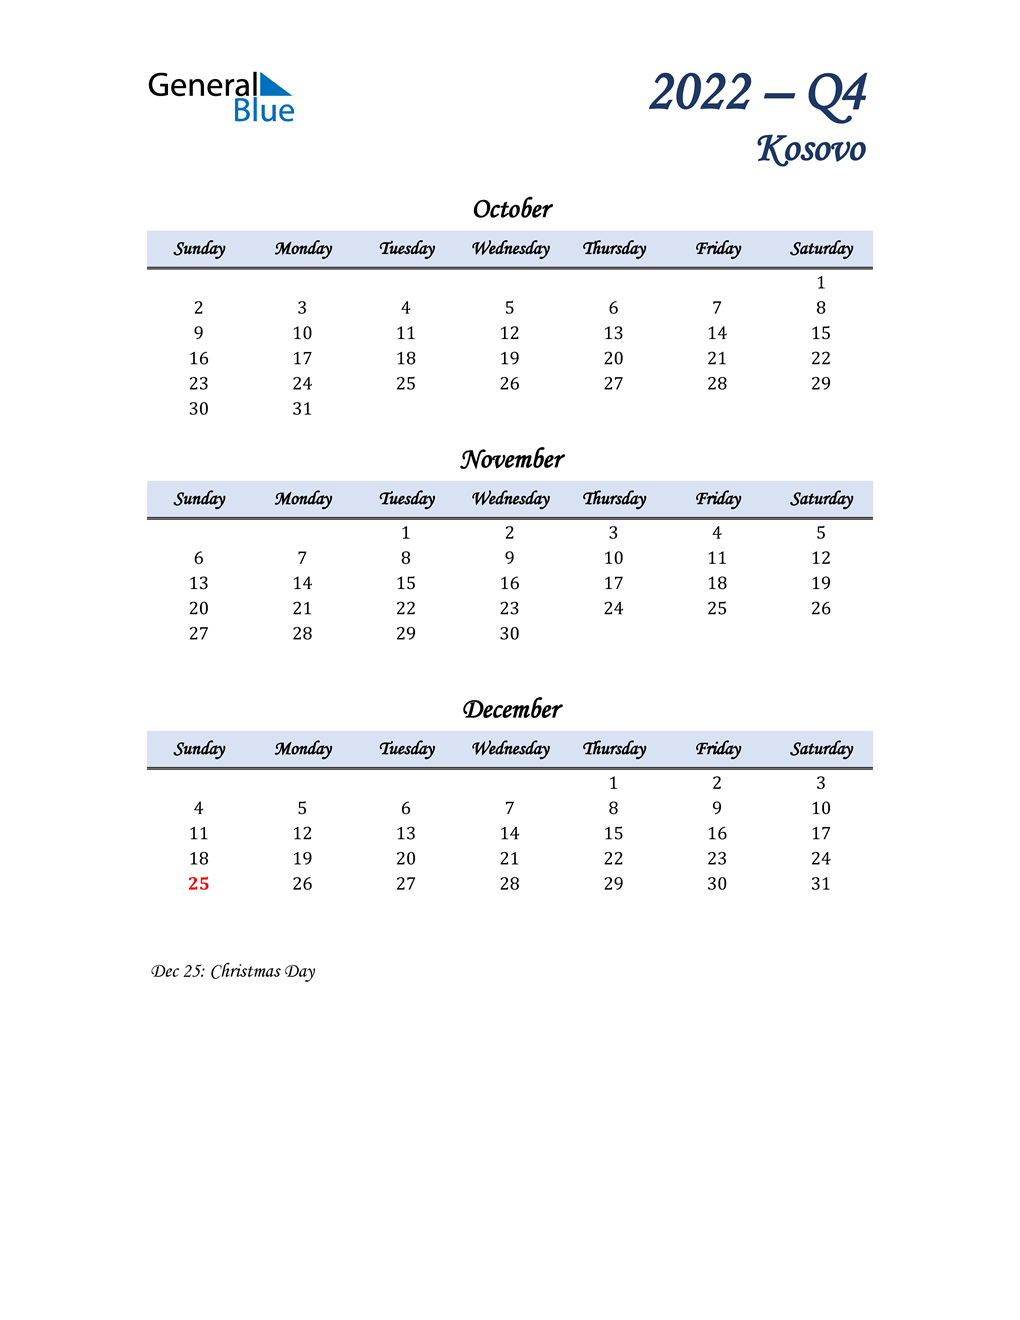  October, November, and December Calendar for Kosovo